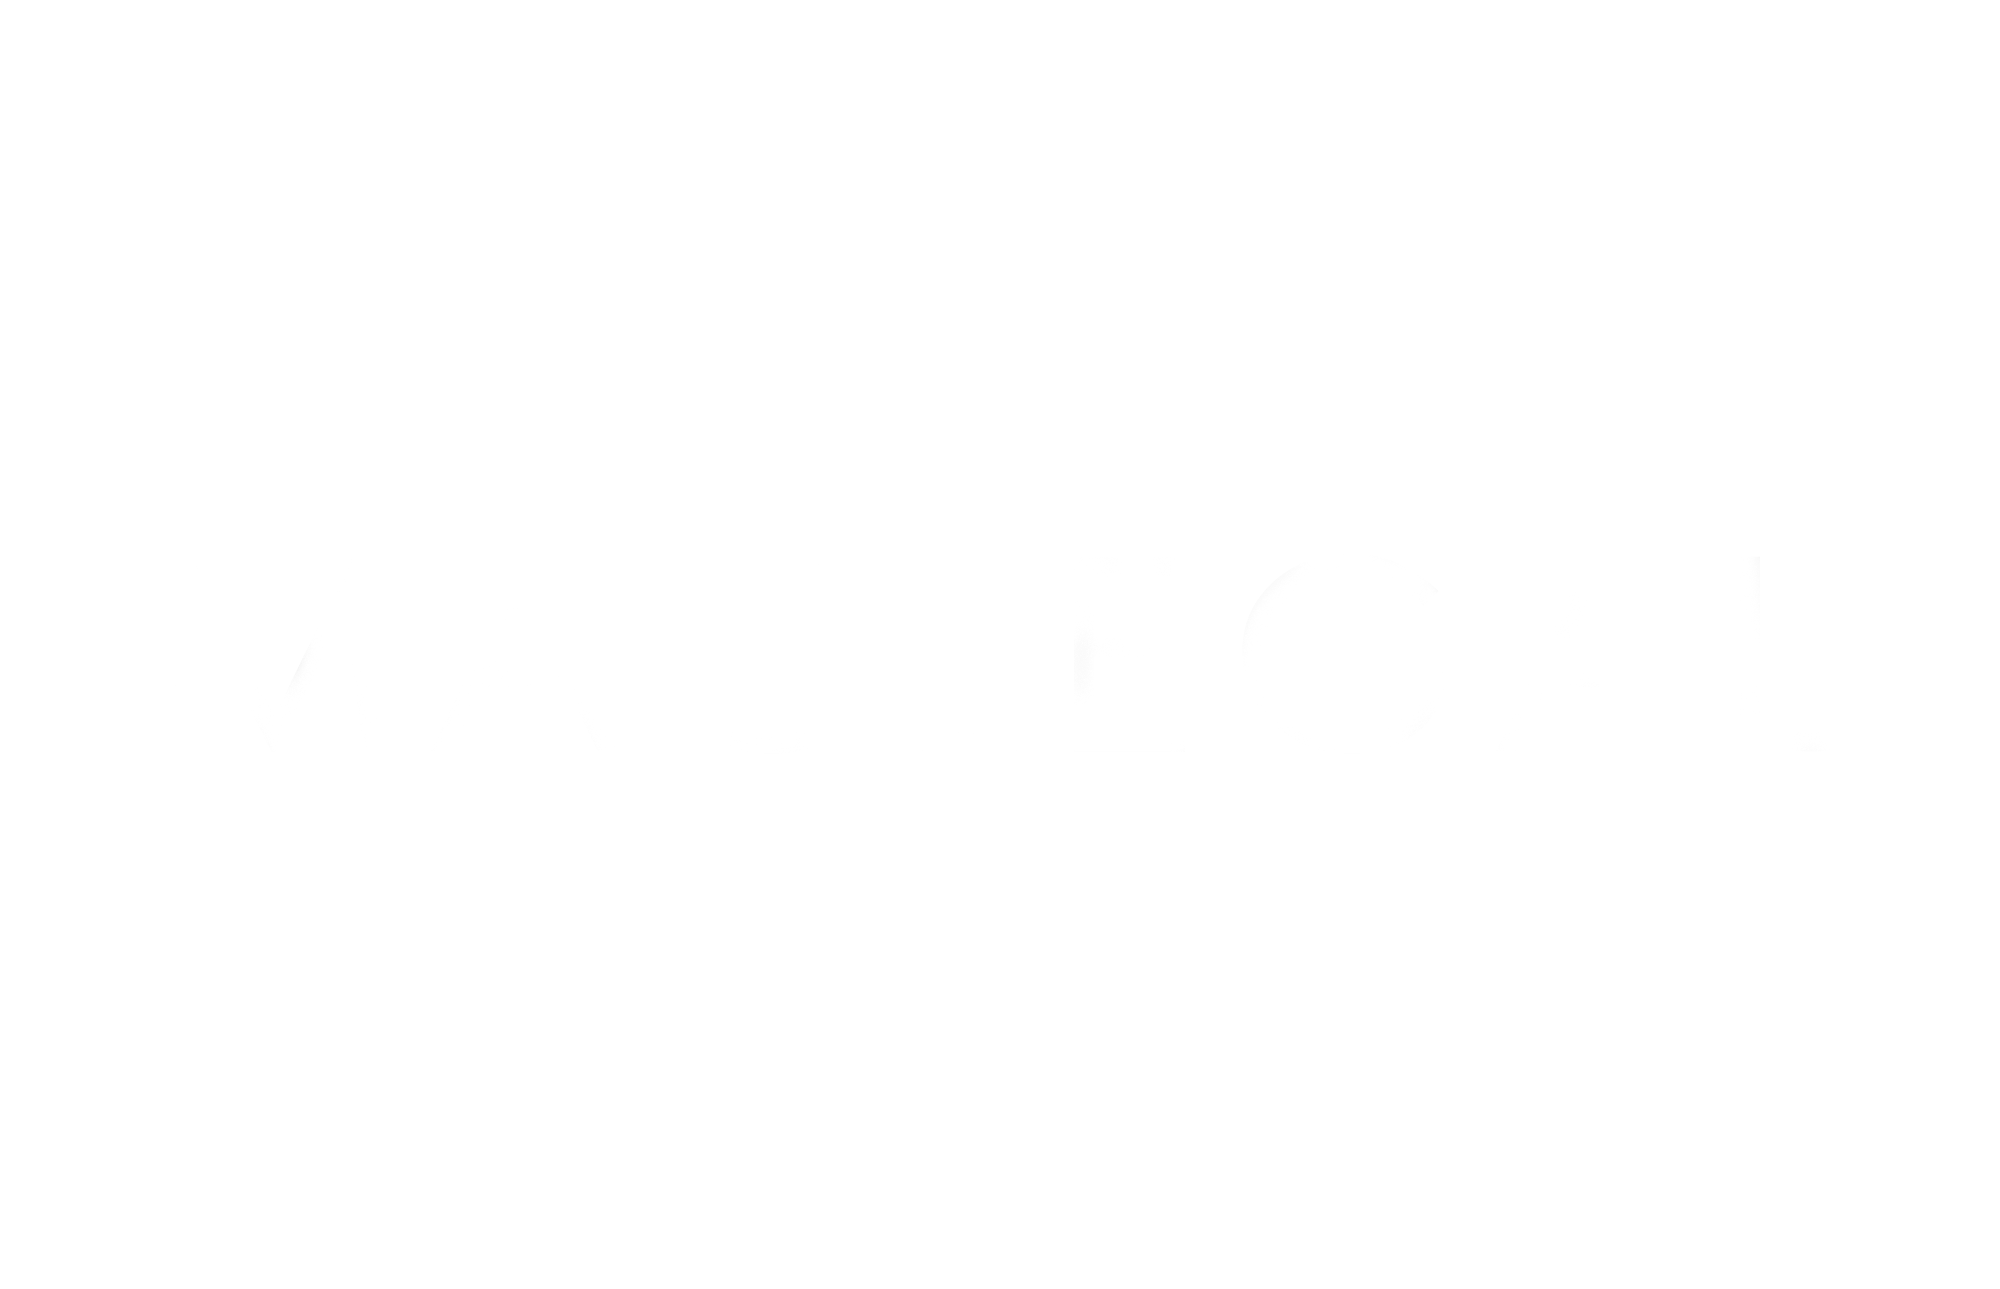 MAC Legal